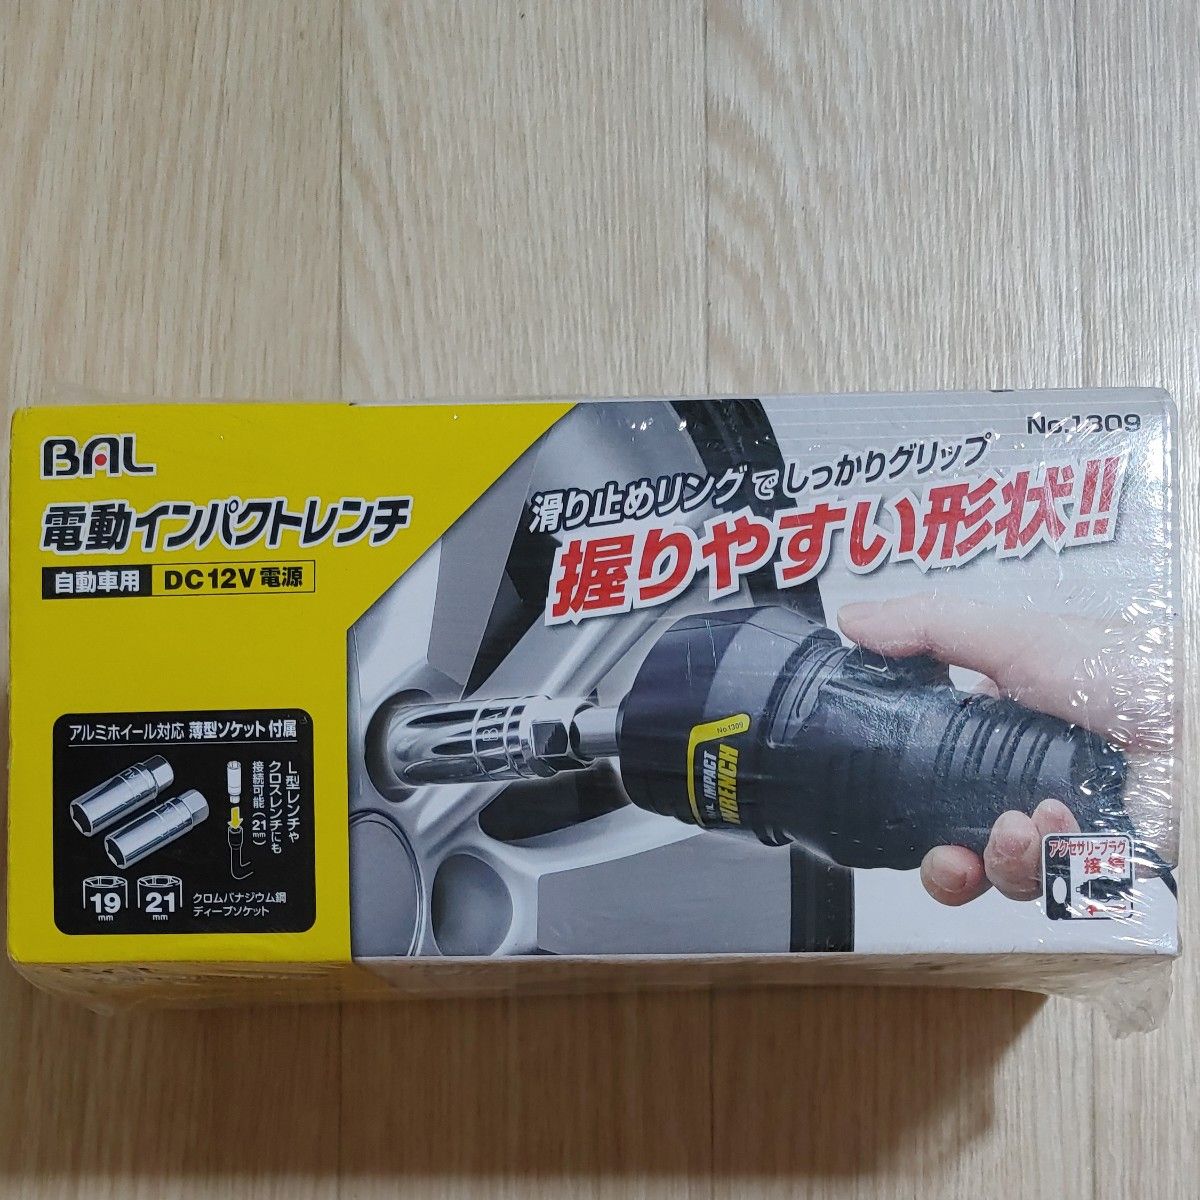 BAL ( 大橋産業 ) デジタルインパクトレンチ 1305 - 電動工具